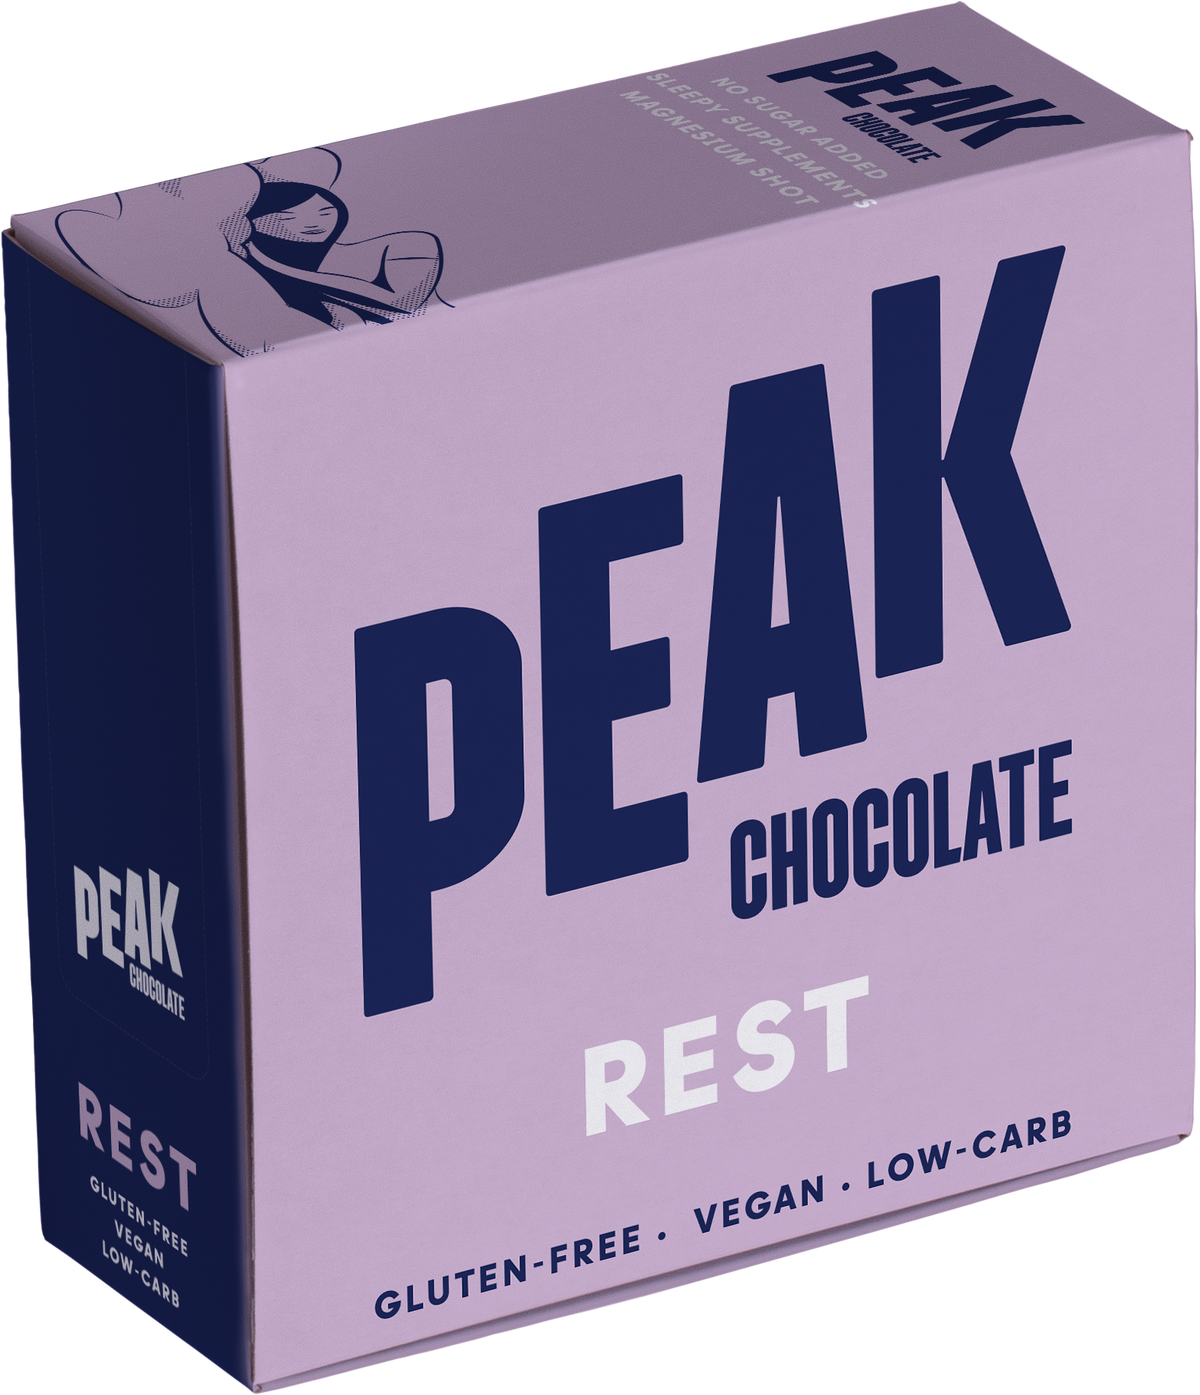 Peak Chocolate Dark Chocolate Bar Rest 80g x 8 Display